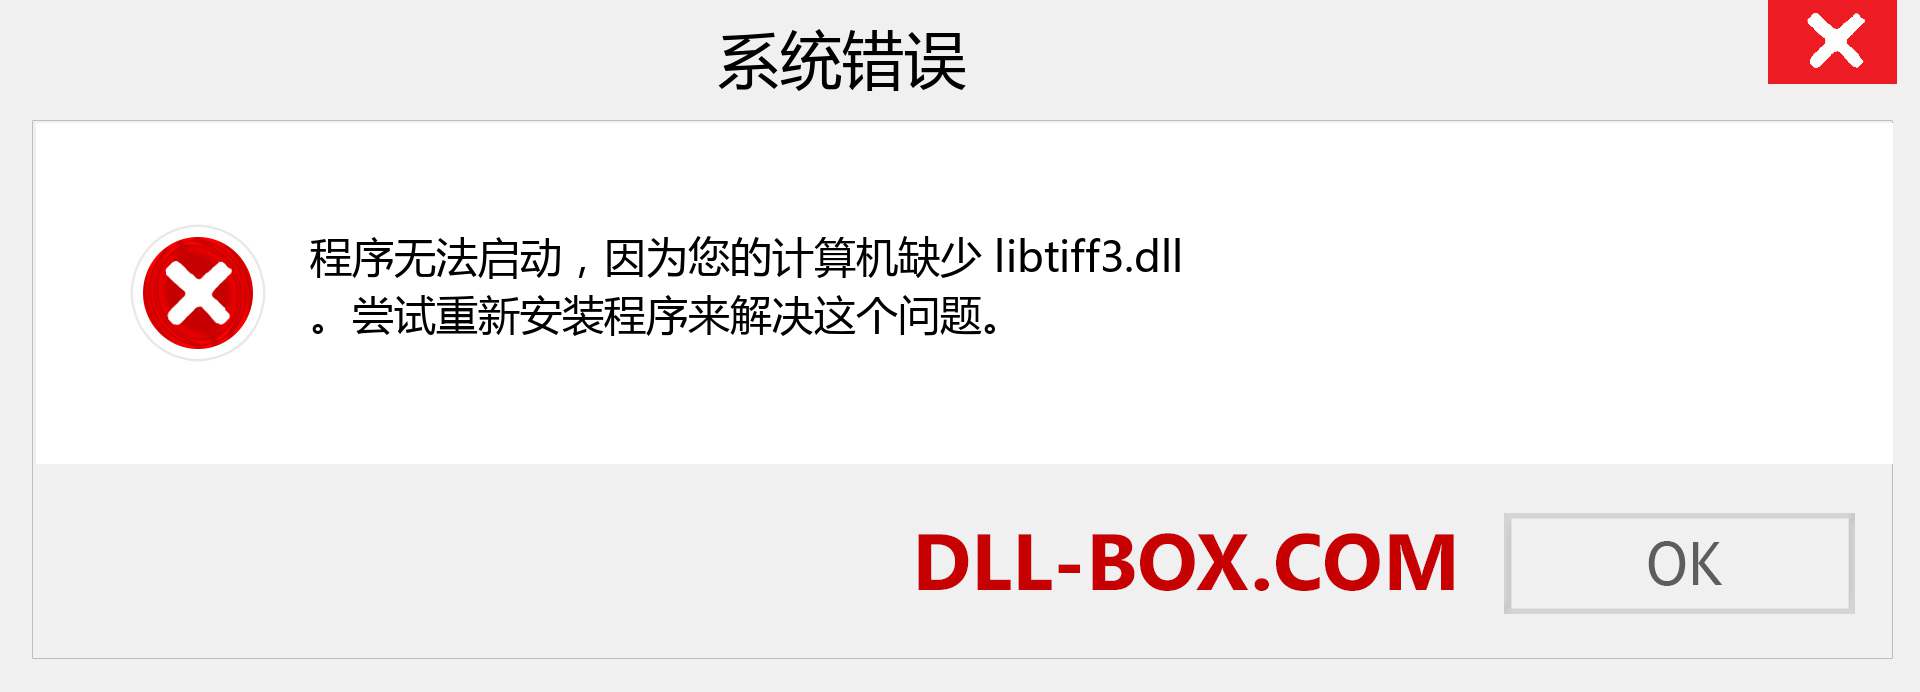 libtiff3.dll 文件丢失？。 适用于 Windows 7、8、10 的下载 - 修复 Windows、照片、图像上的 libtiff3 dll 丢失错误